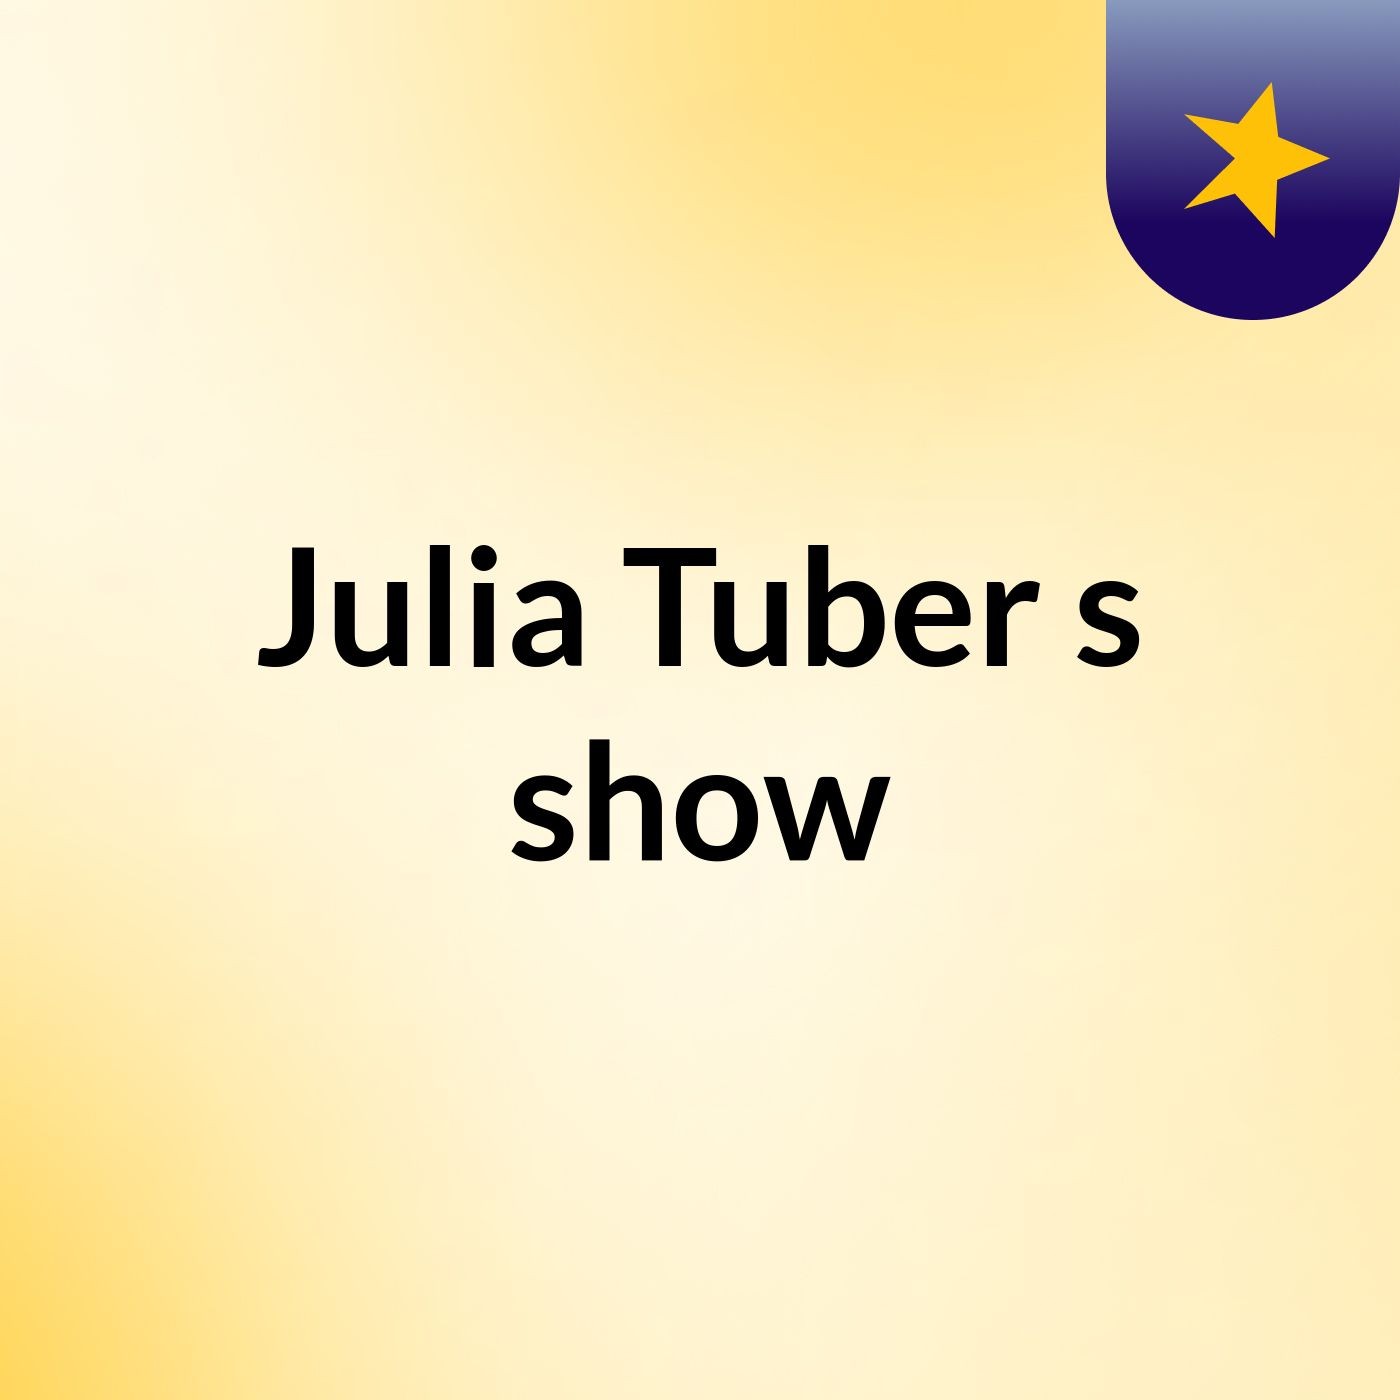 Julia Tuber's show